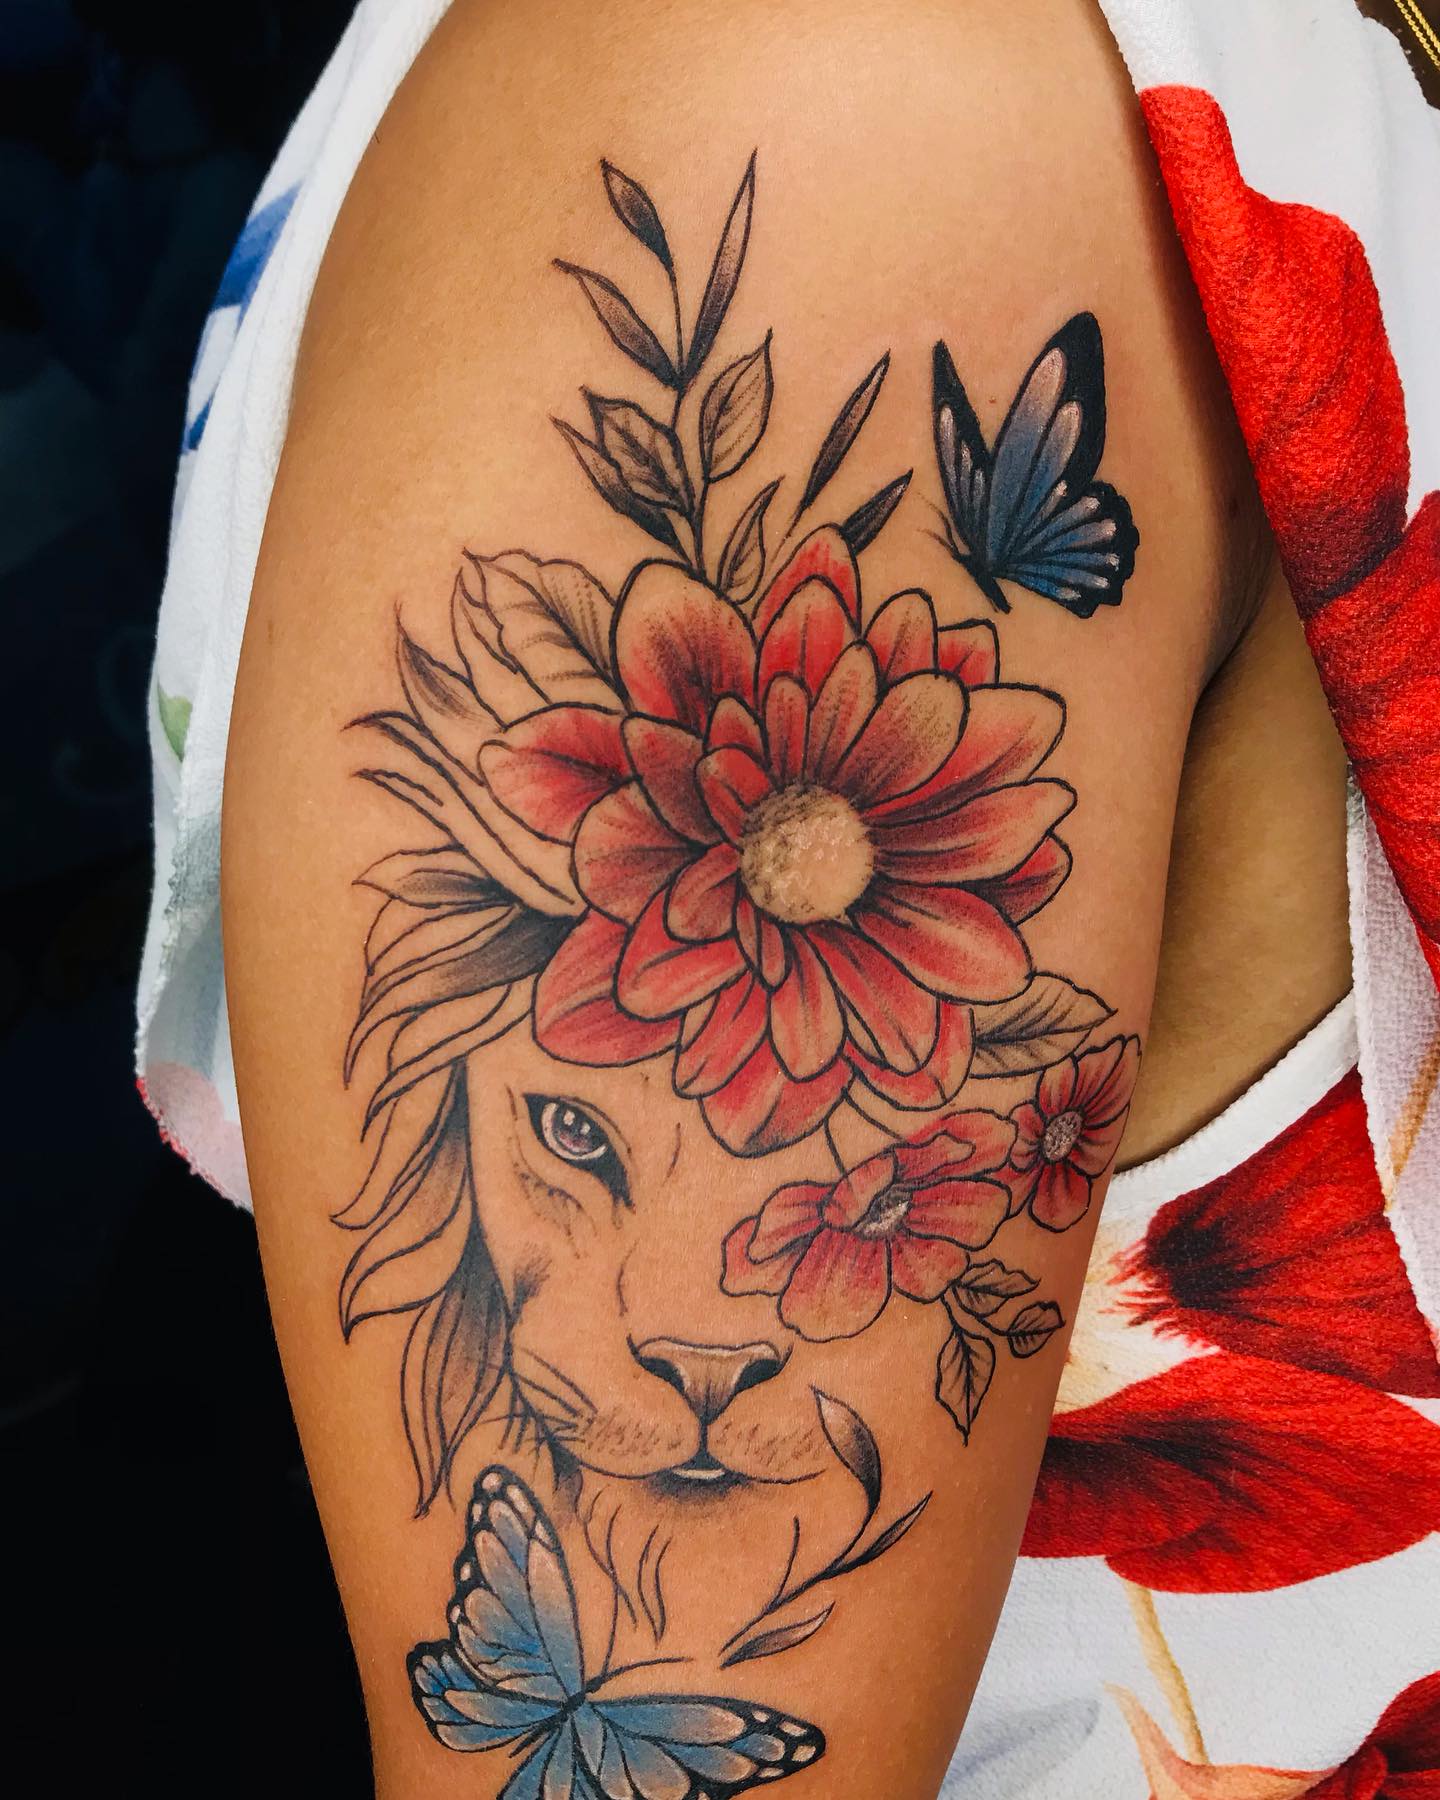 Colorful Half Lion Half Flower Tattoo on Arm